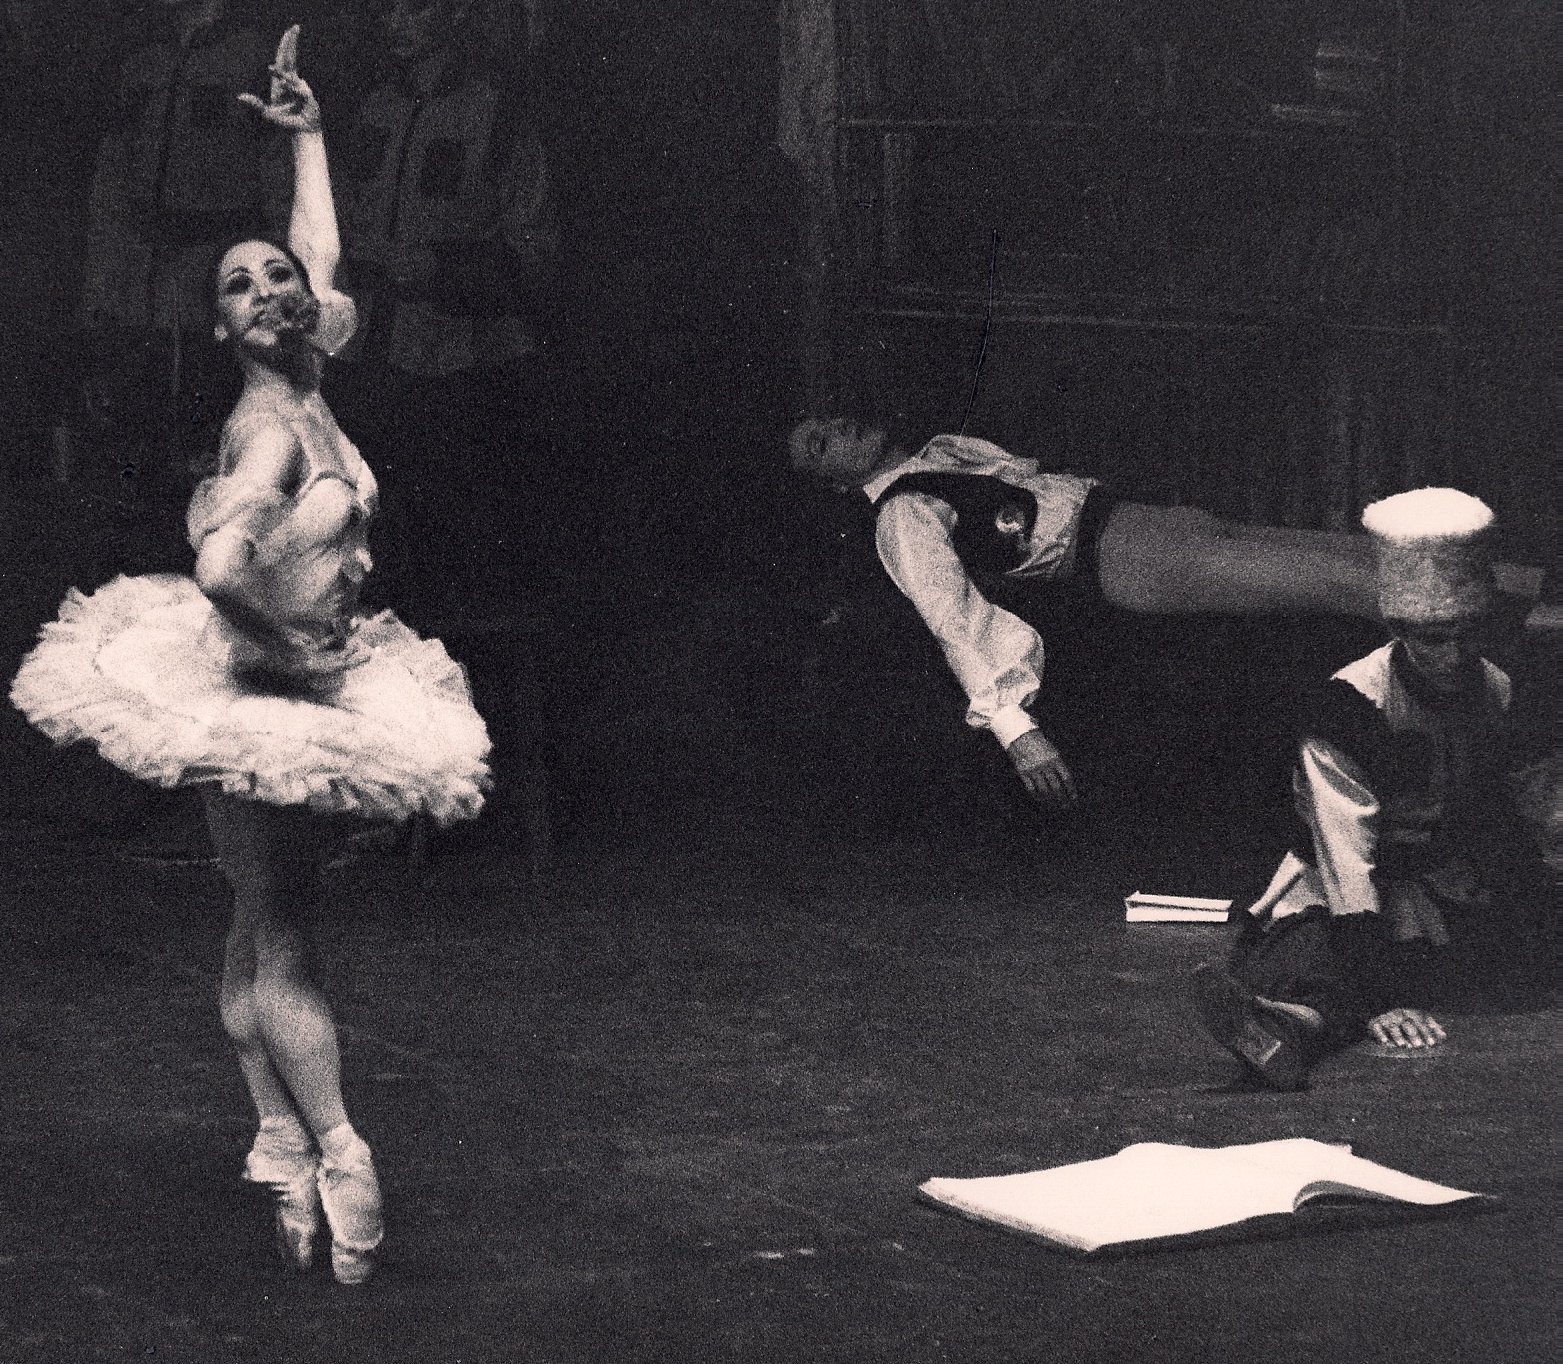  Coppelia/National Ballet of Cuba 